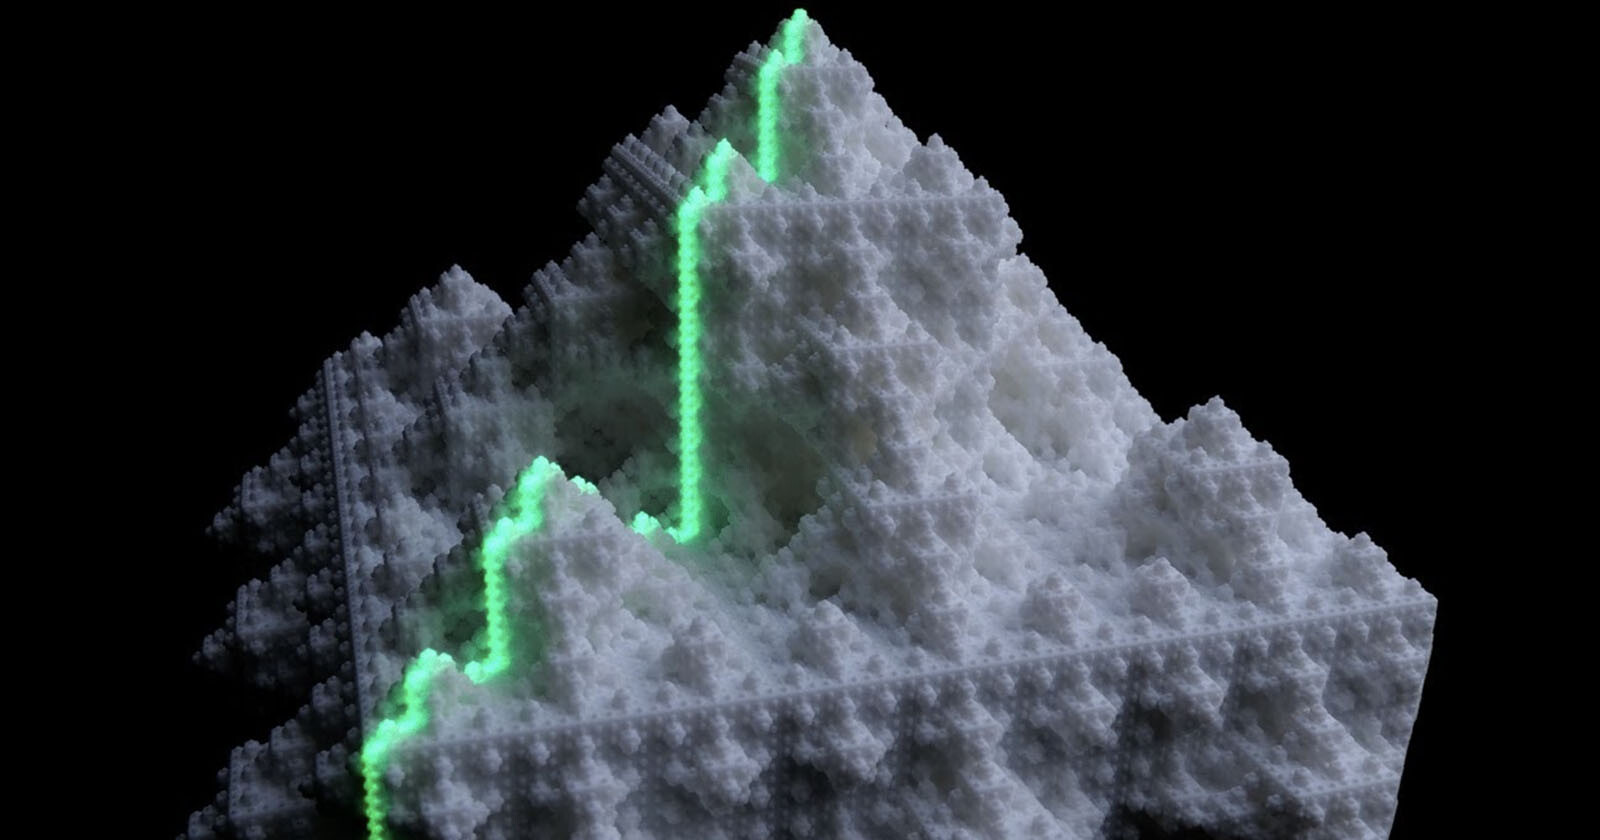  real-life infinite fractal zoom shot looks like 